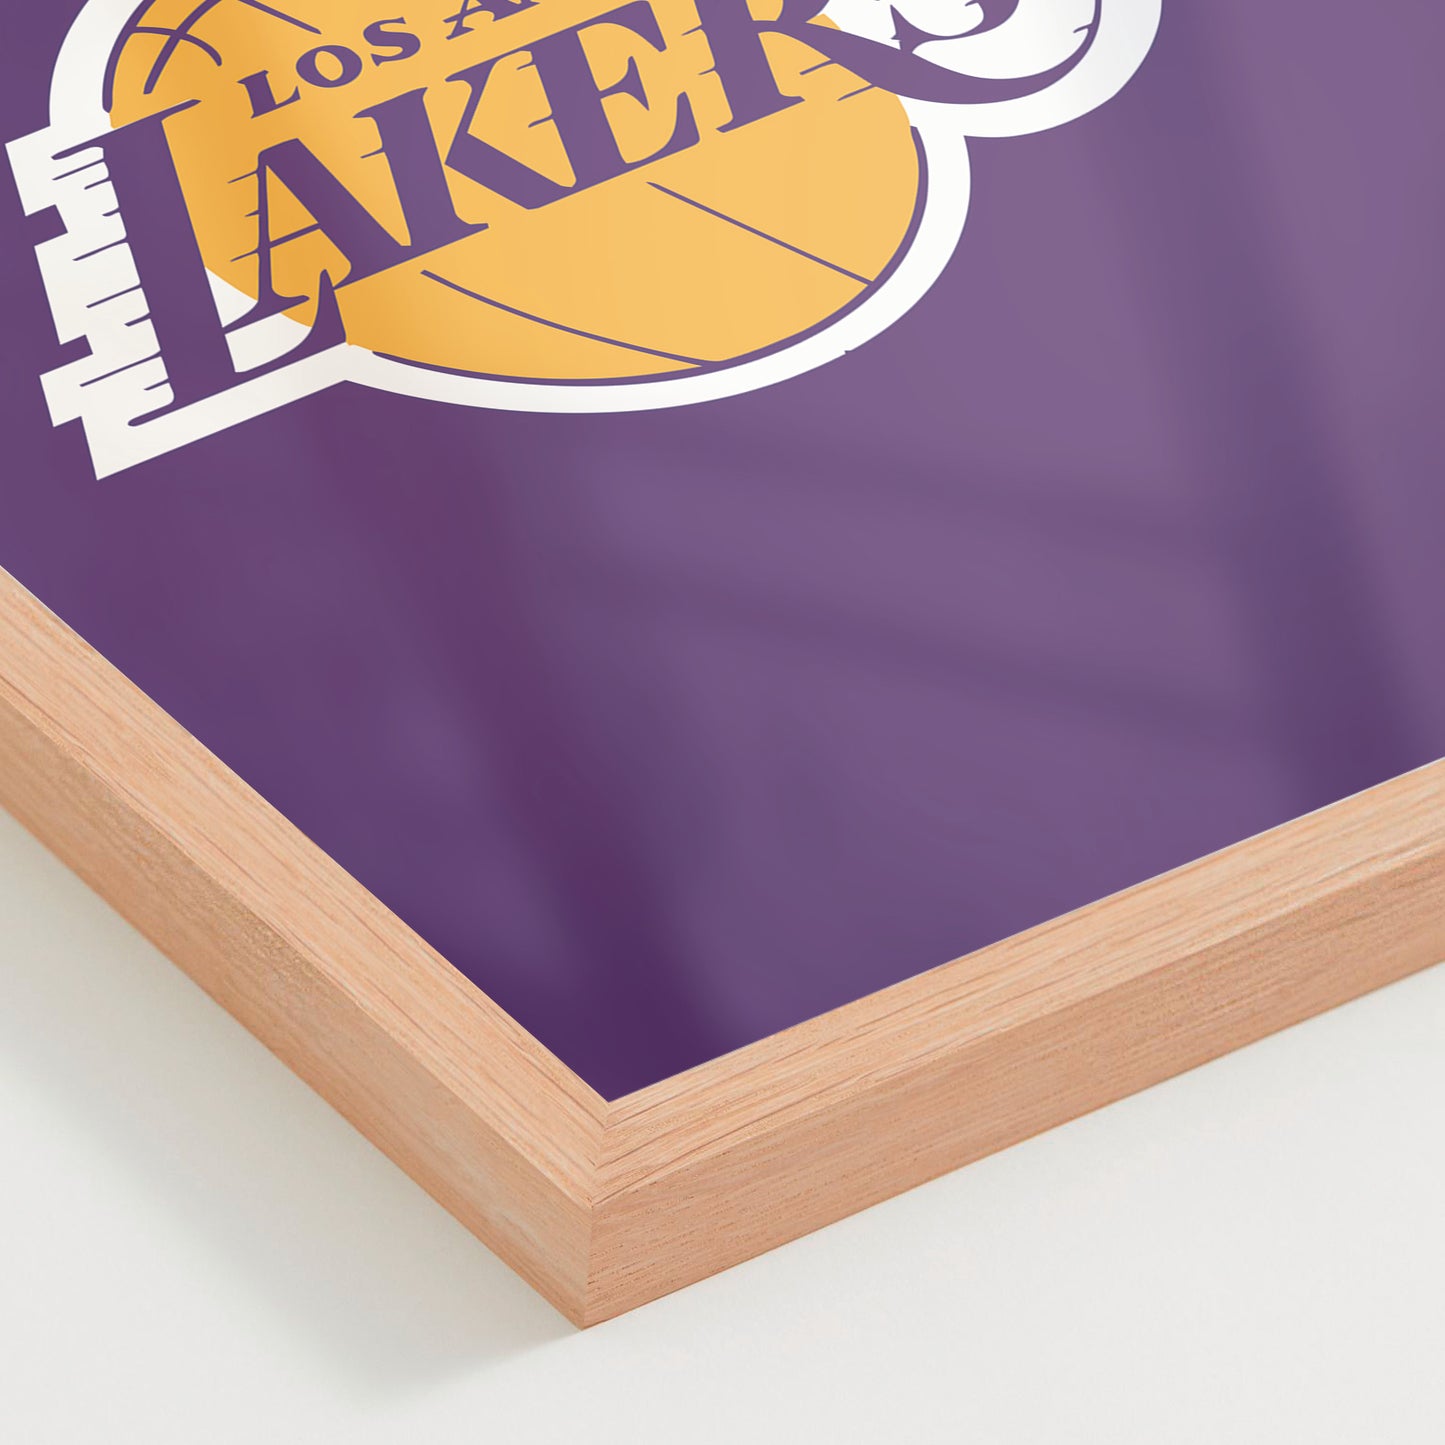 Los Angeles Lakers 01